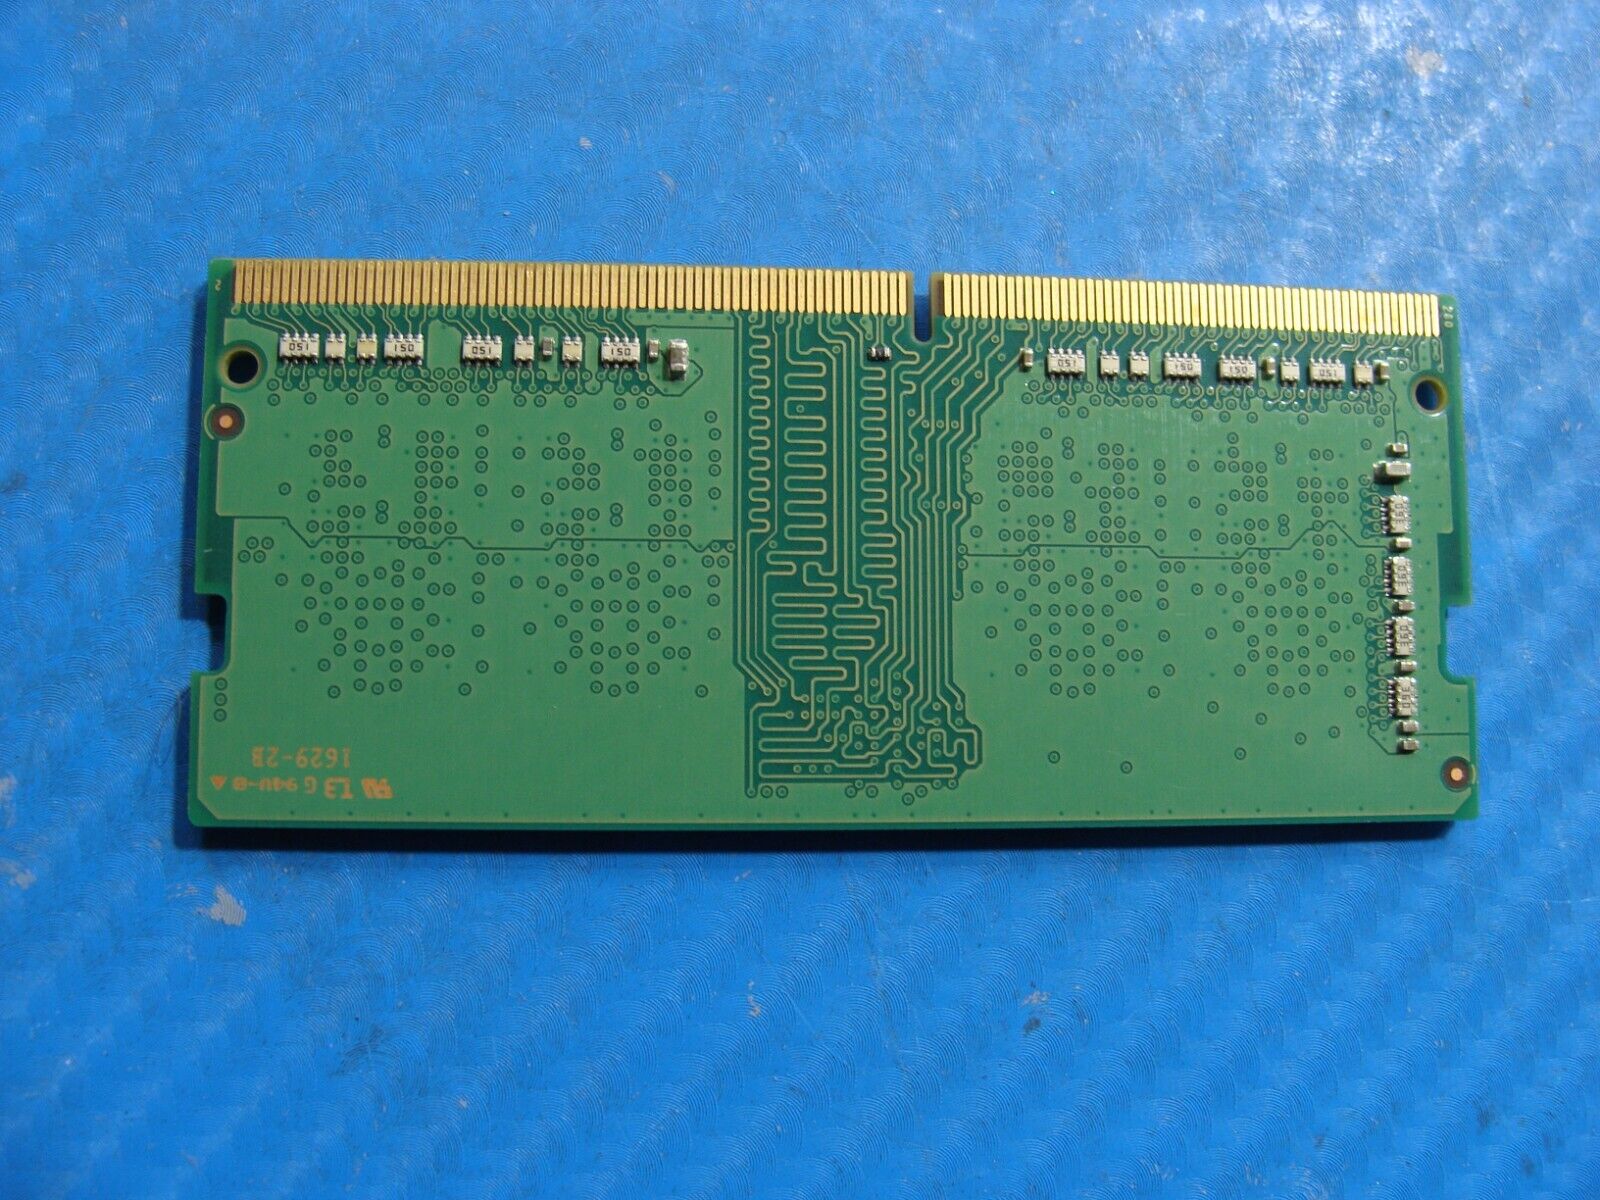 Dell Inspiron 7586 2GB PC4-2133P SO-DIMM Memory RAM 820569-005